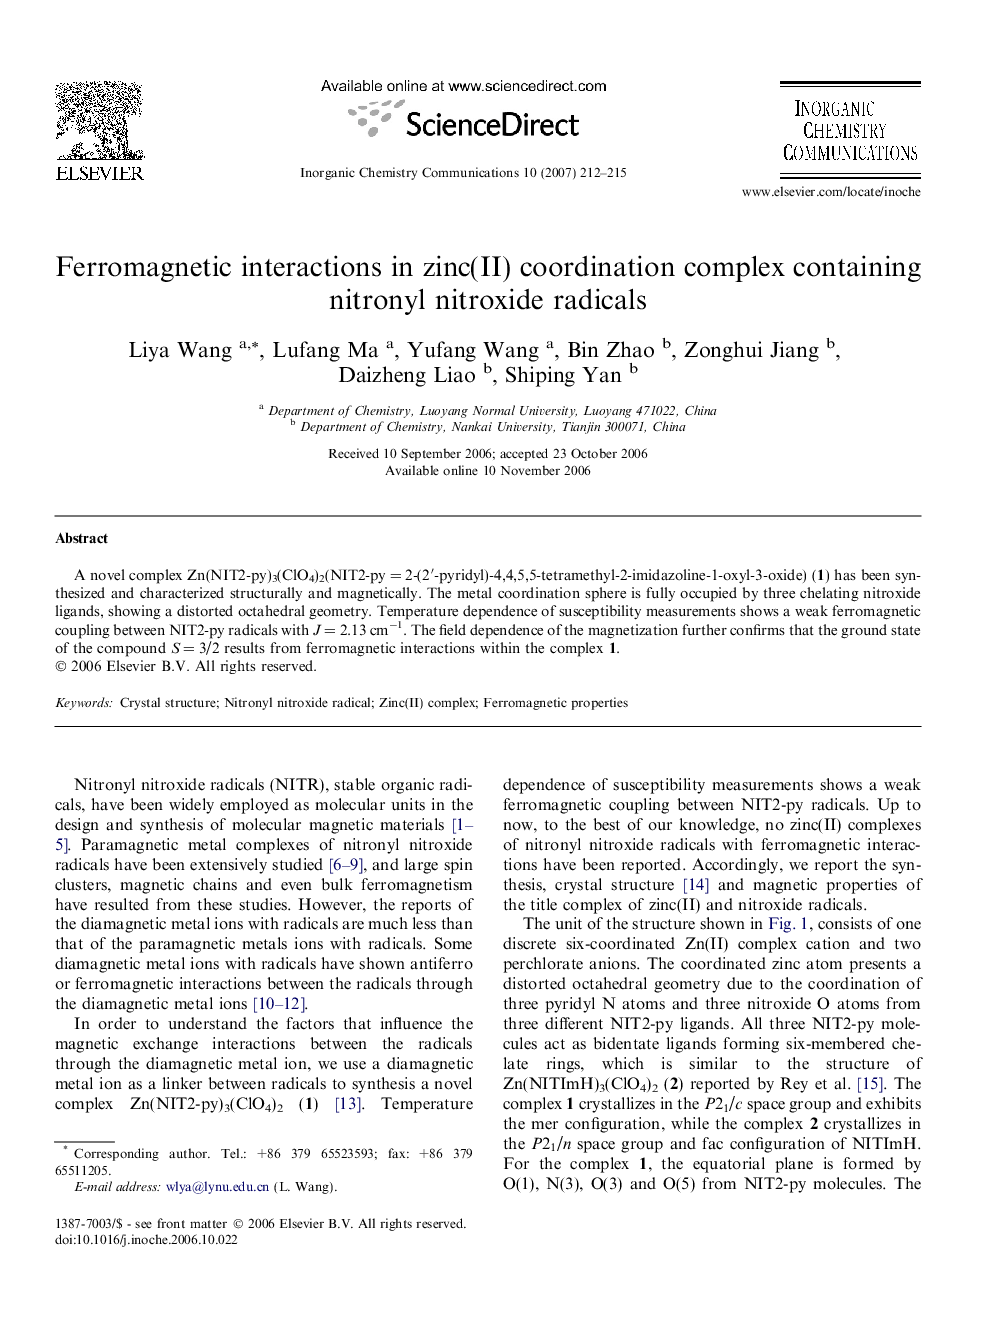 Ferromagnetic interactions in zinc(II) coordination complex containing nitronyl nitroxide radicals